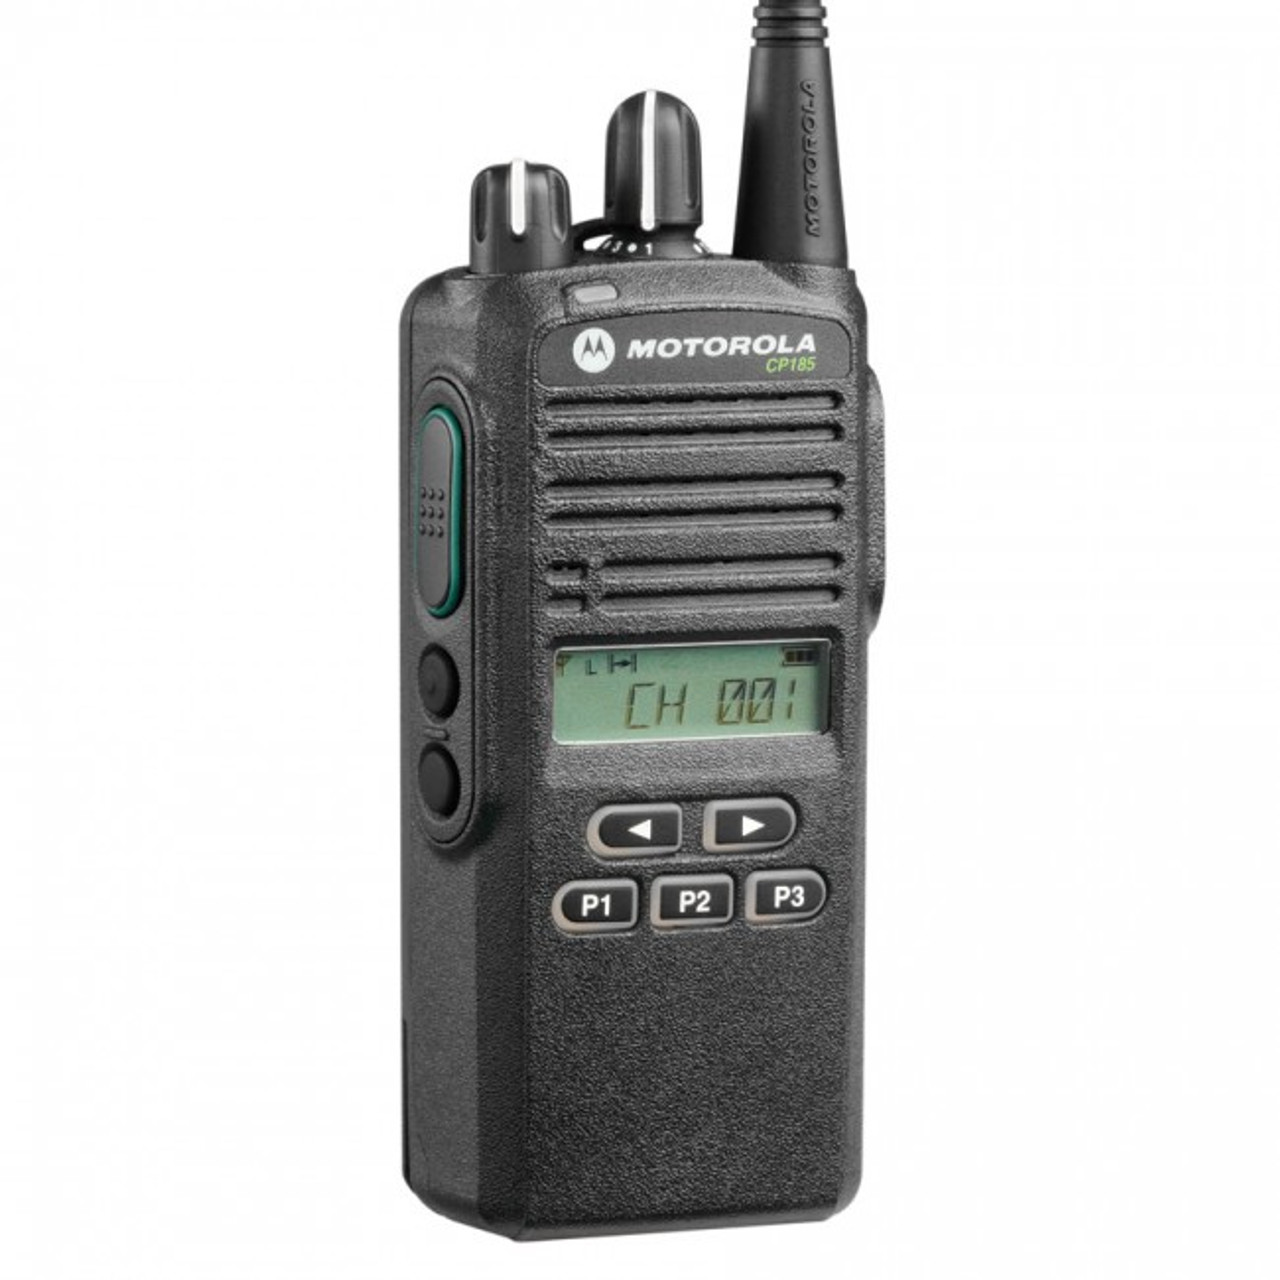 MOTOROLA CP185-V Radio VHF 16CH Portable Radio HiTech Wireless Store  Business Two Way Radio